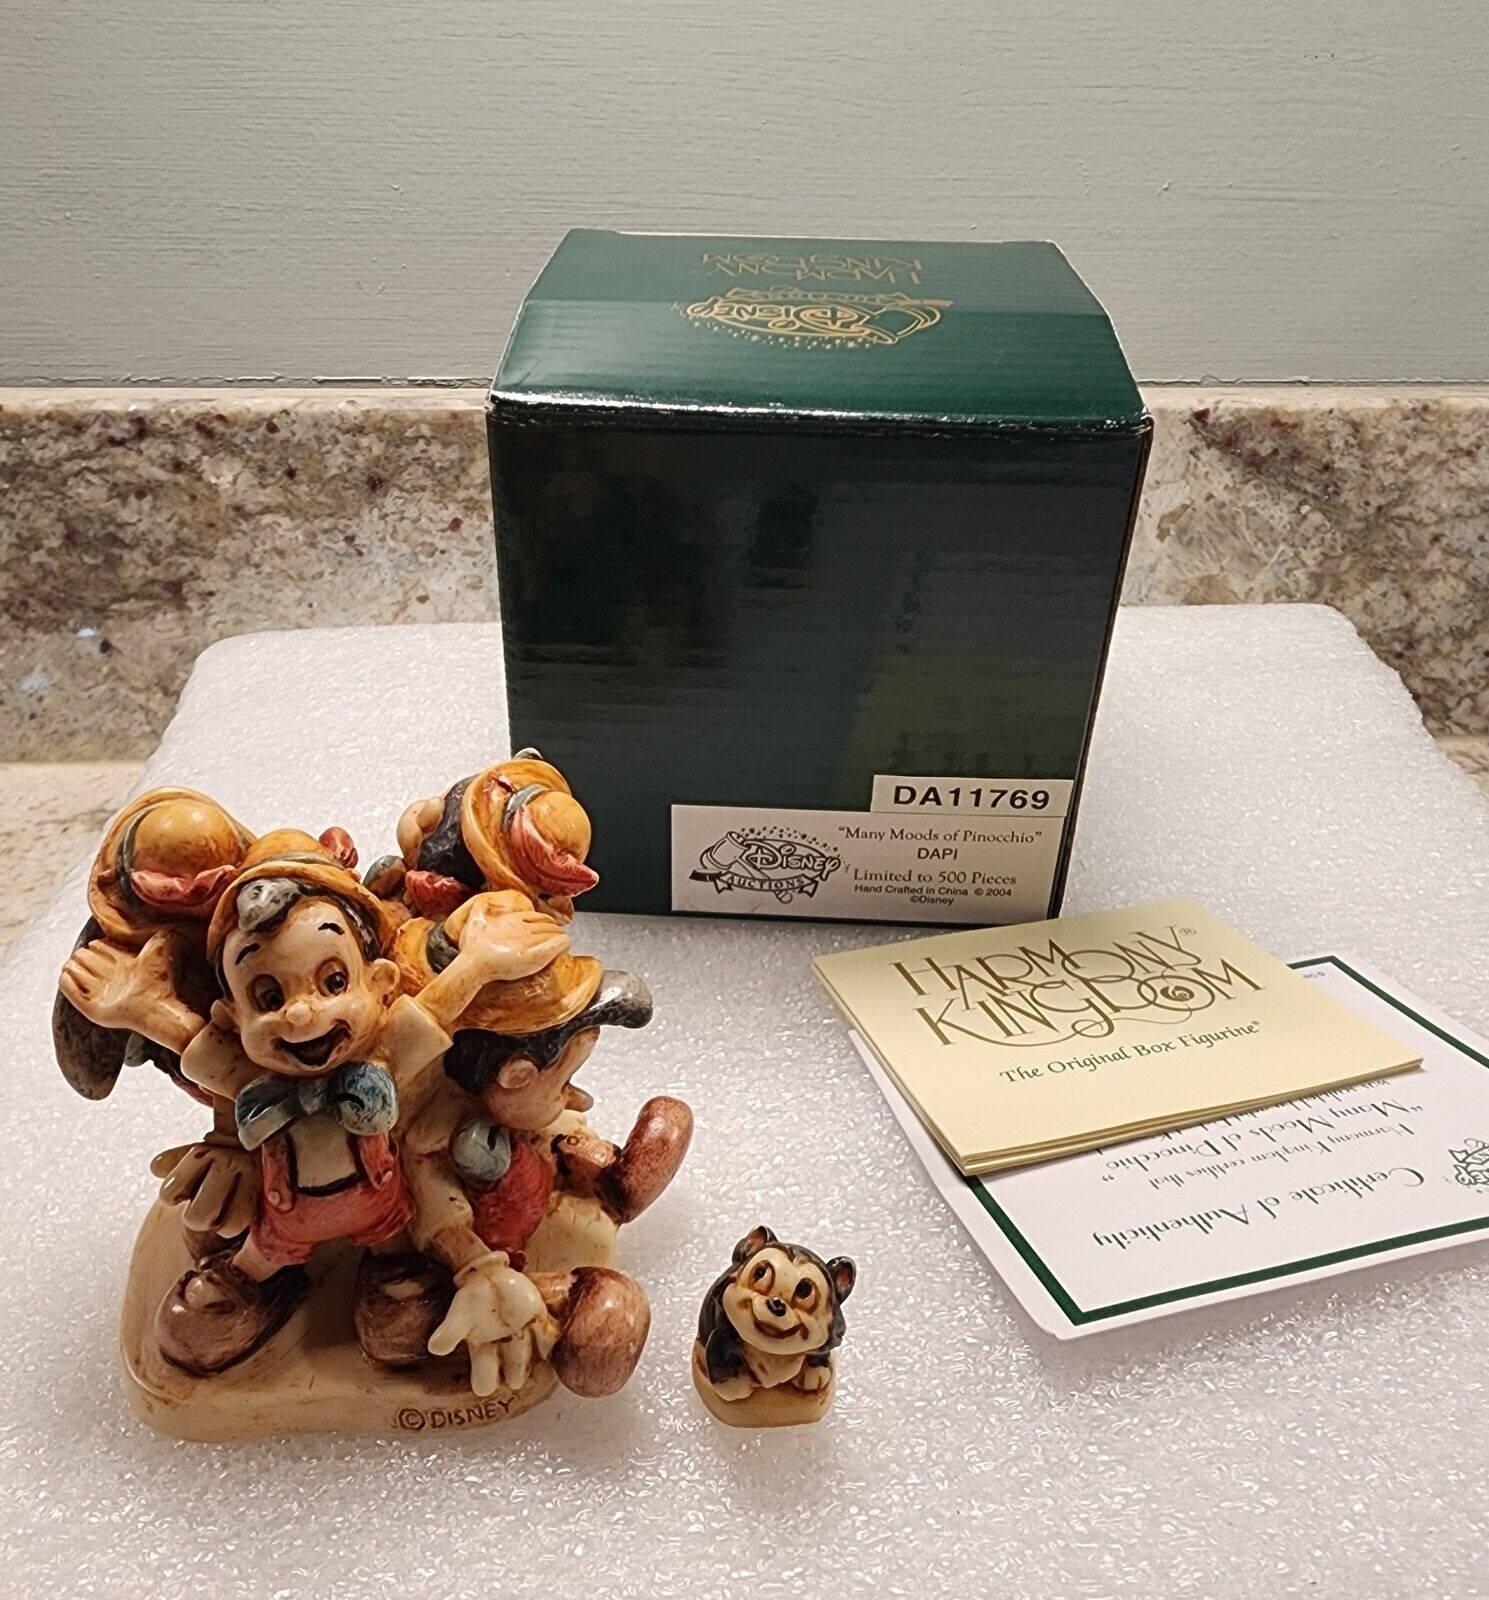 DISNEY HARMONY KINGDOM Moods Of Pinocchio W/ Figaro  box and certificate LE 500